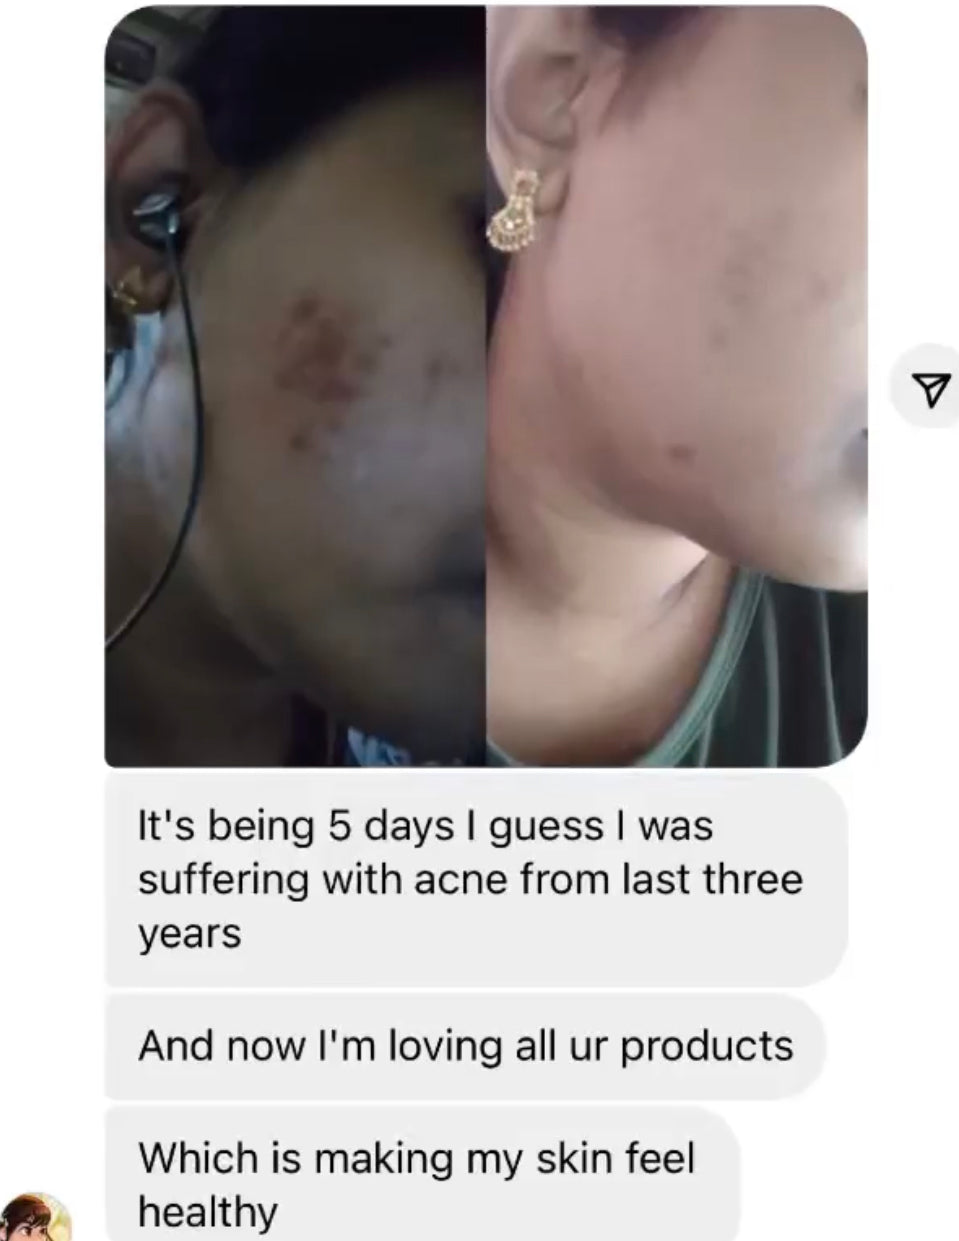 Acne care kit “say bye bye to acne”